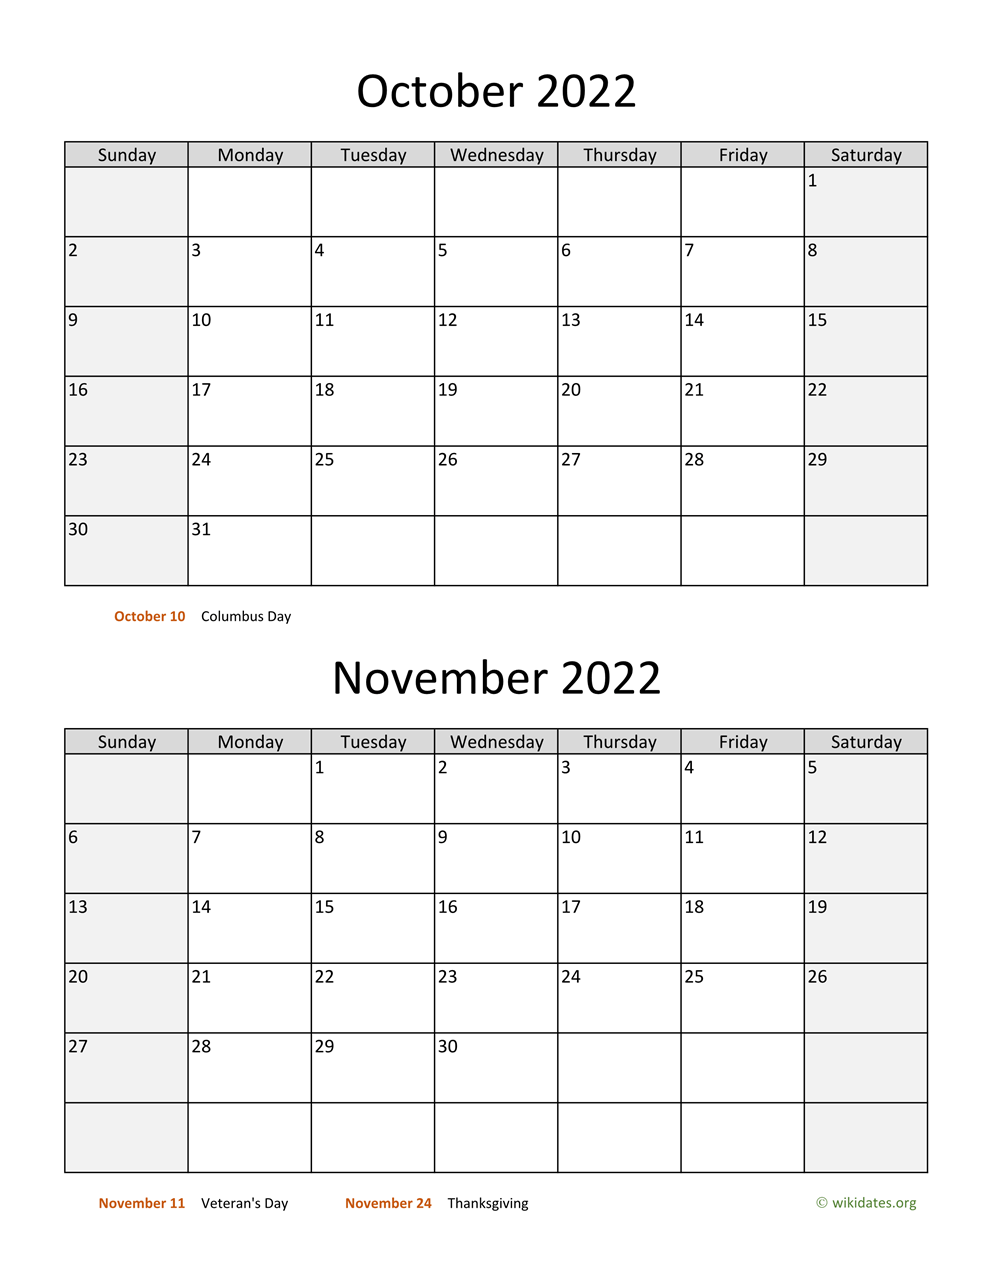 October November 2022 Calendar October And November 2022 Calendar | Wikidates.org